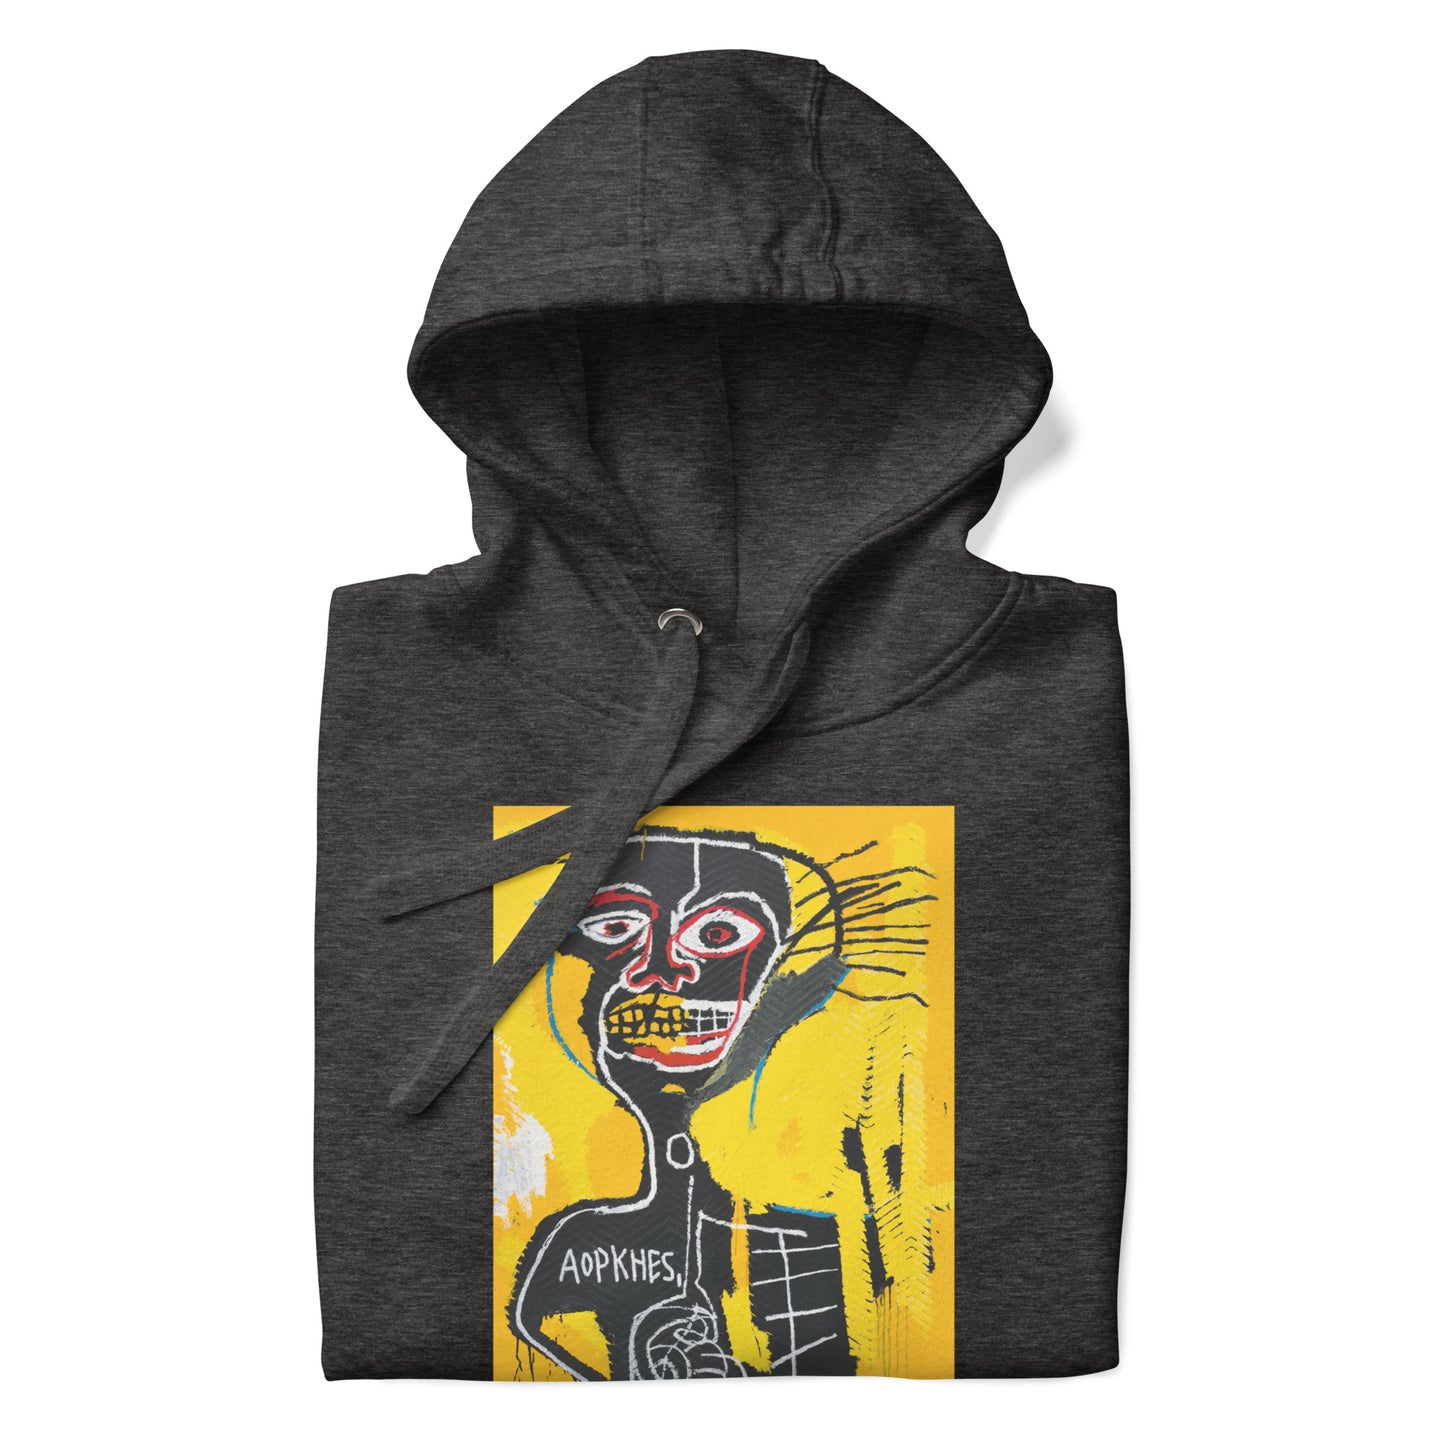 Jean-Michel Basquiat "Cabeza" Artwork Printed Premium Streetwear Sweatshirt Hoodie Charcoal Grey